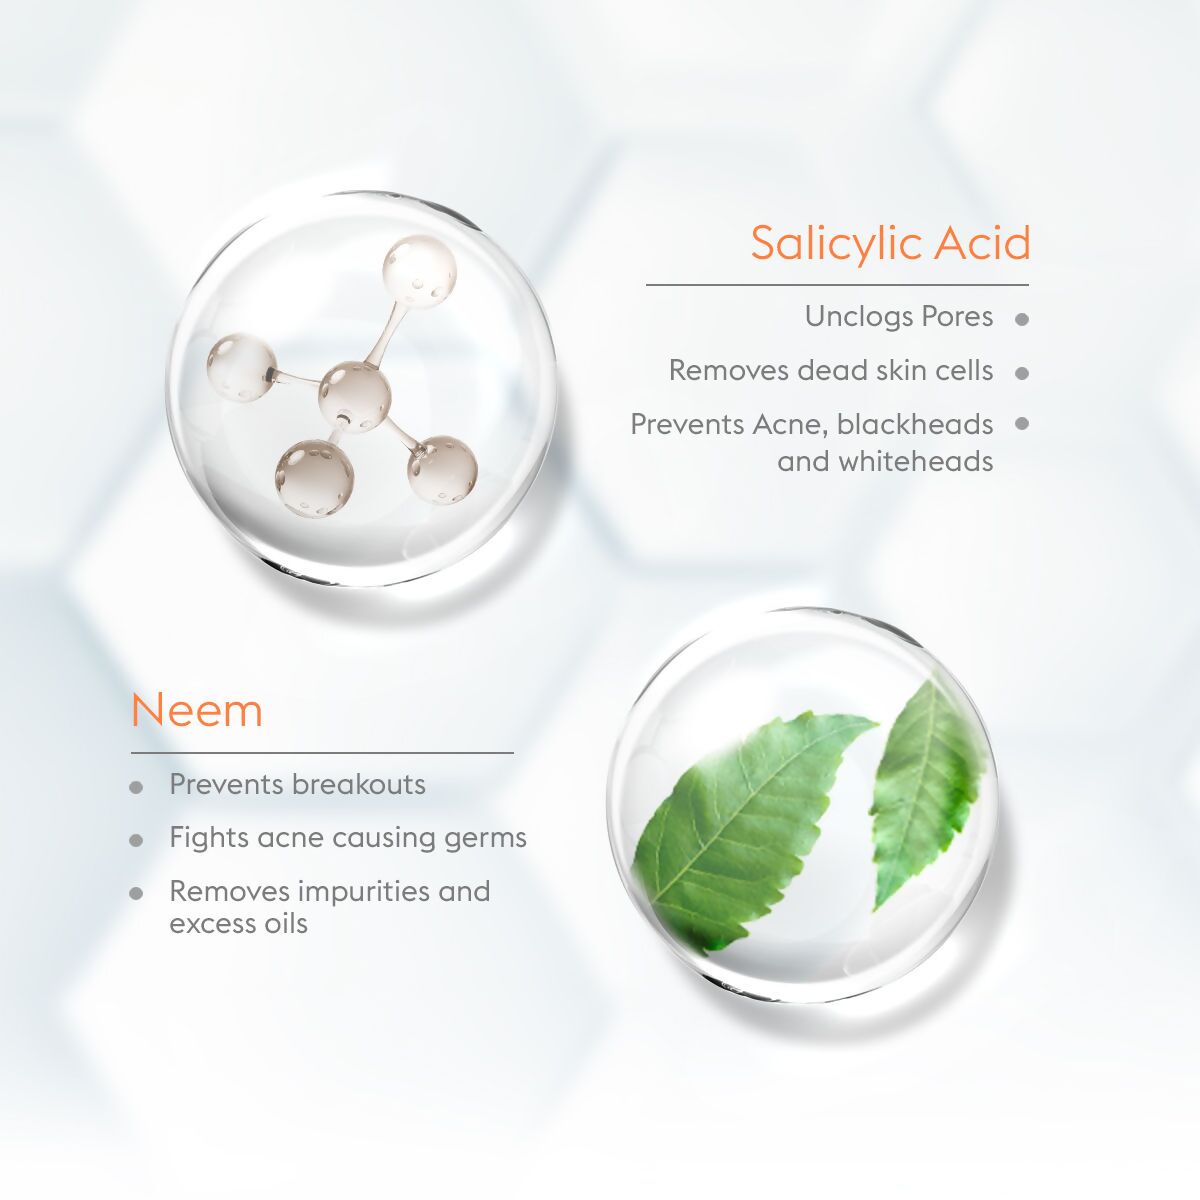 VLCC Acne Defense Serum Face Wash with Salicylic Acid Serum & Neem - Distacart